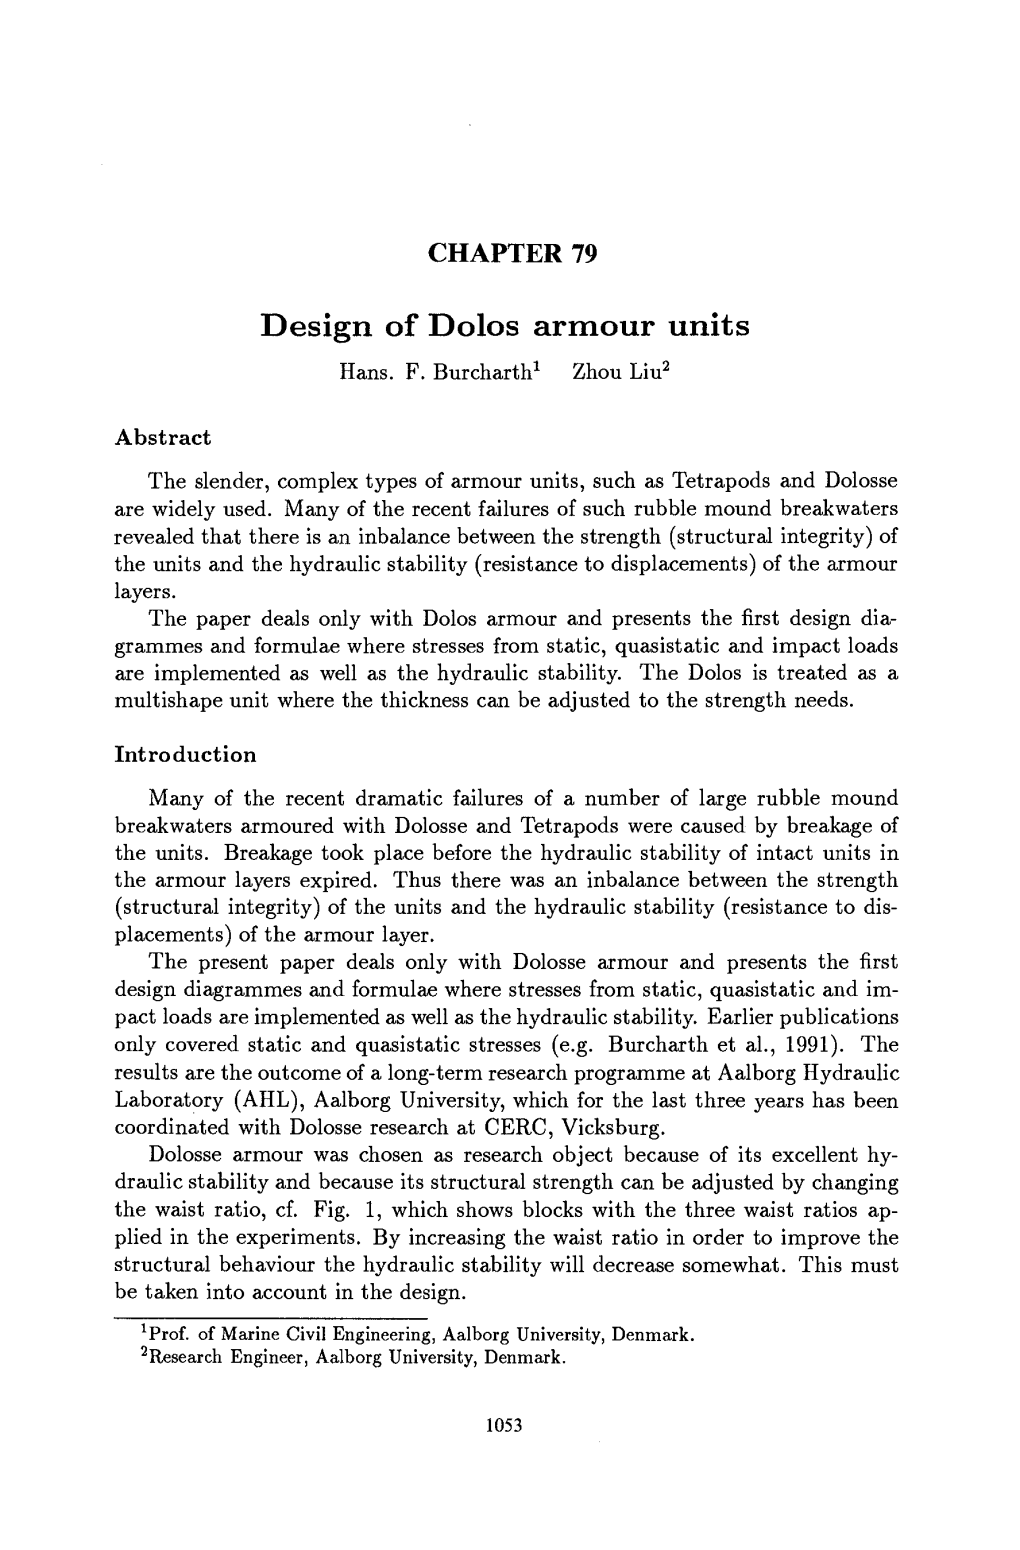 Design of Dolos Armour Units Hans